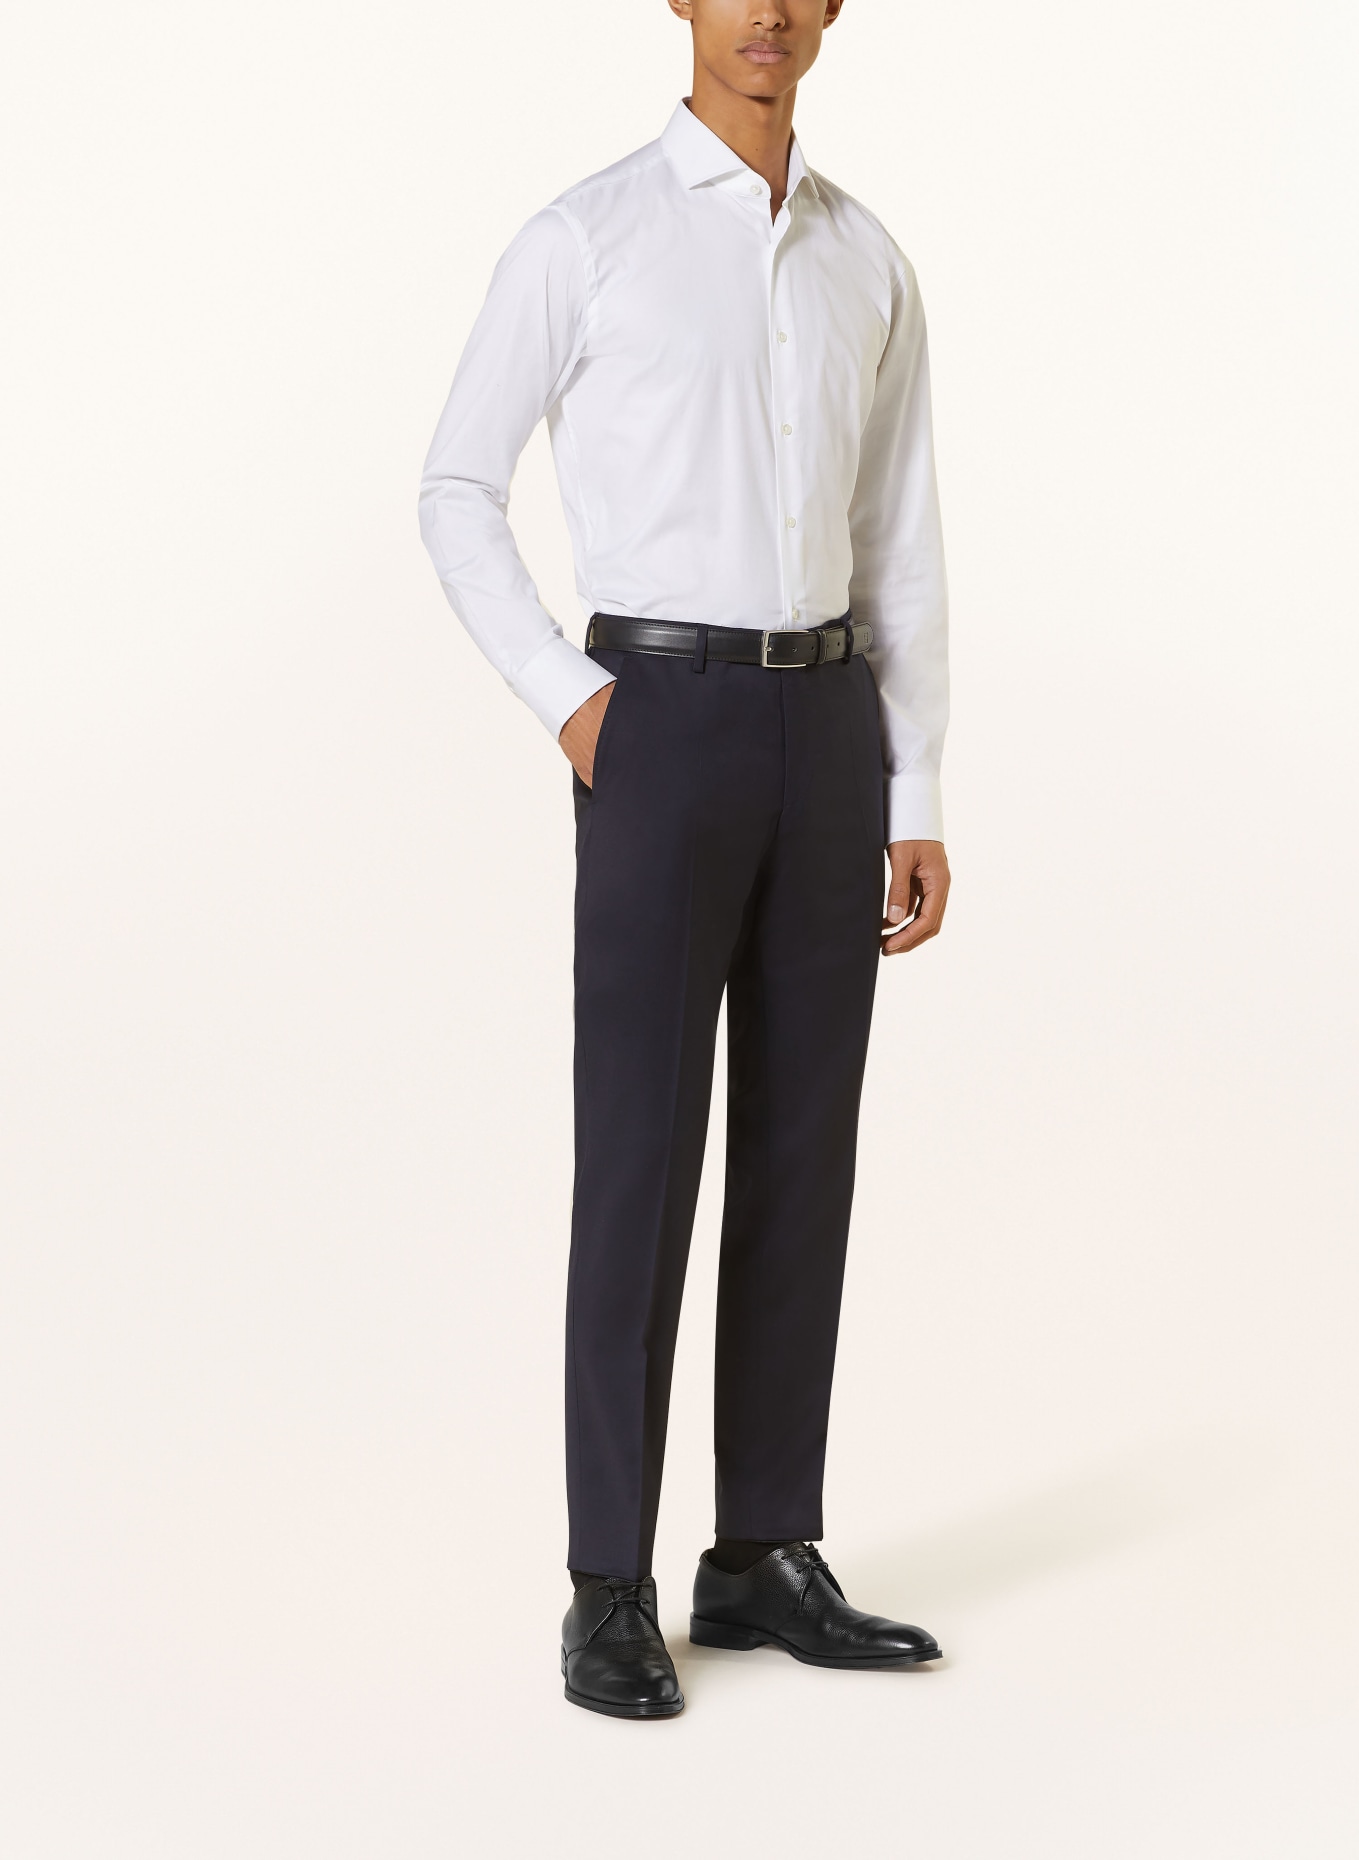 JOOP! Anzughose Slim Fit, Farbe: 401 Dark Blue                  401 (Bild 3)